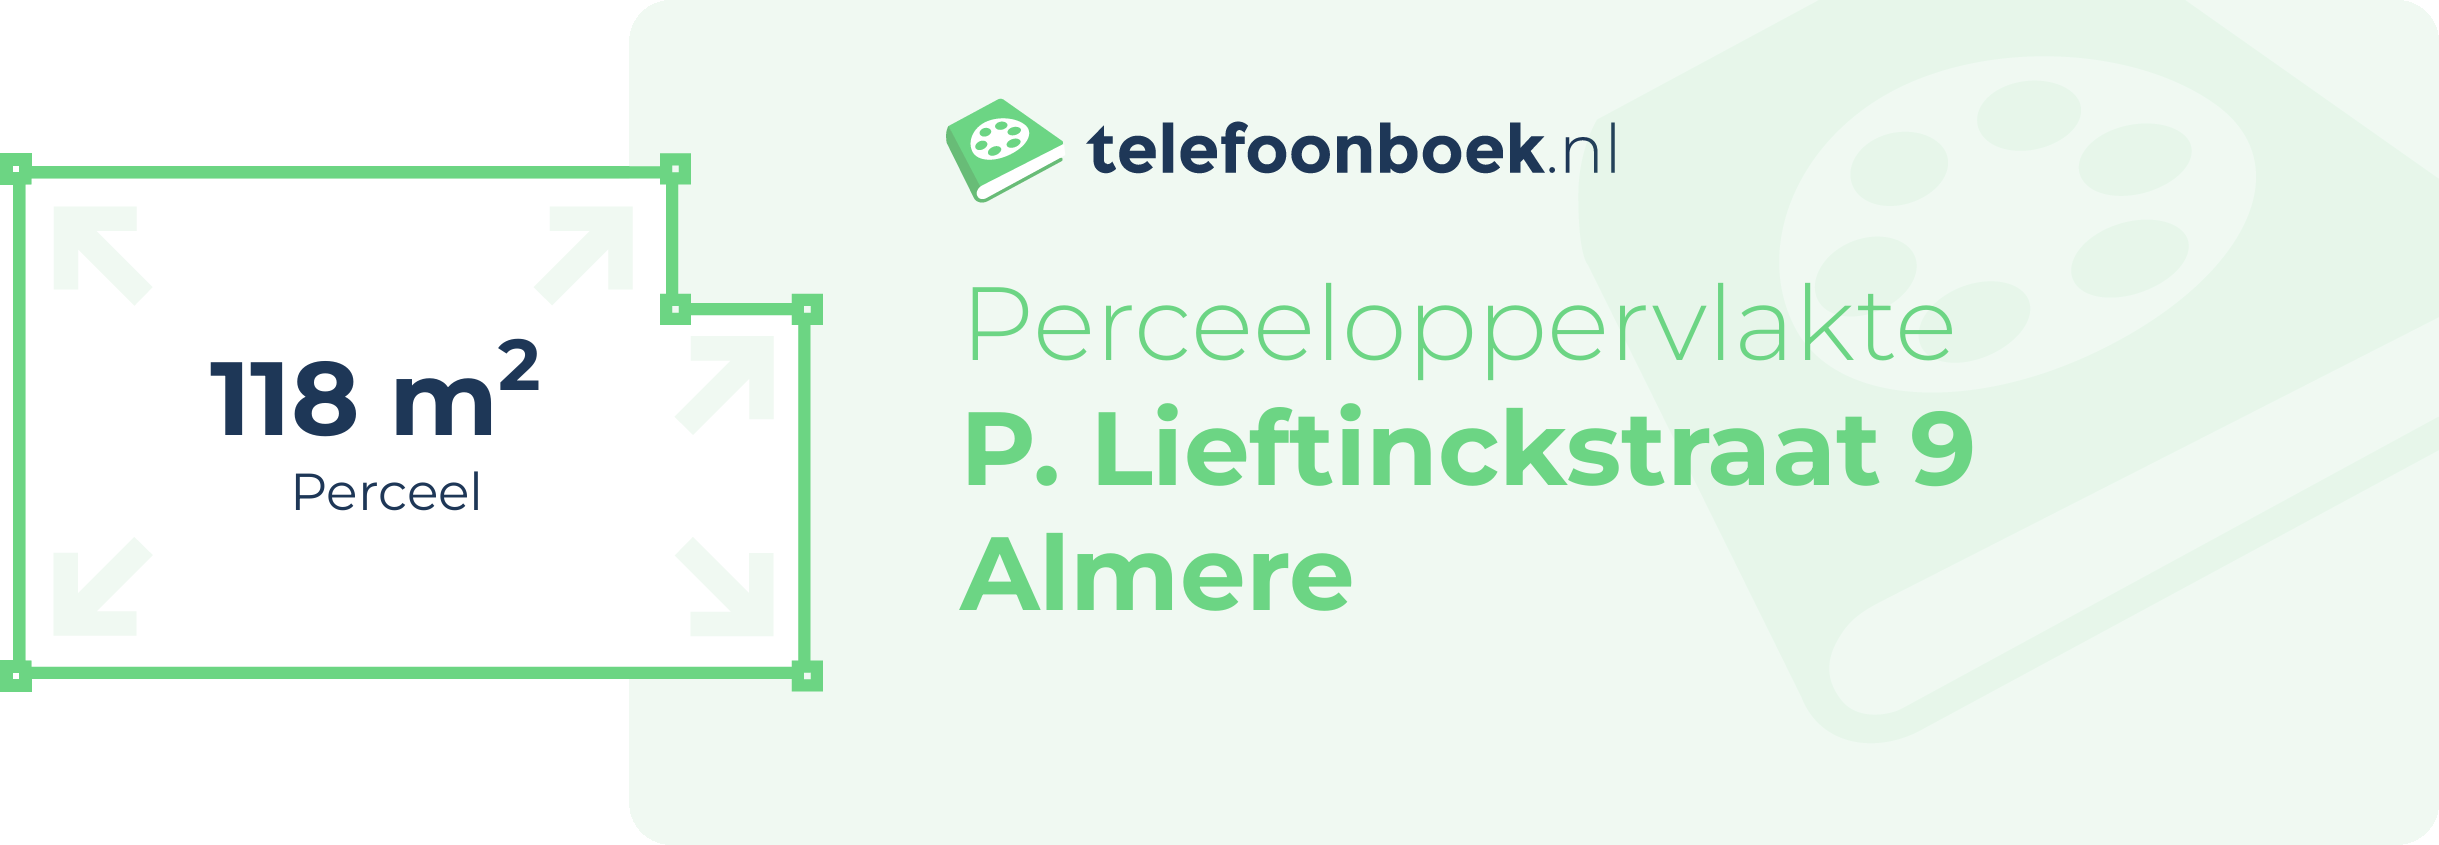 Perceeloppervlakte P. Lieftinckstraat 9 Almere